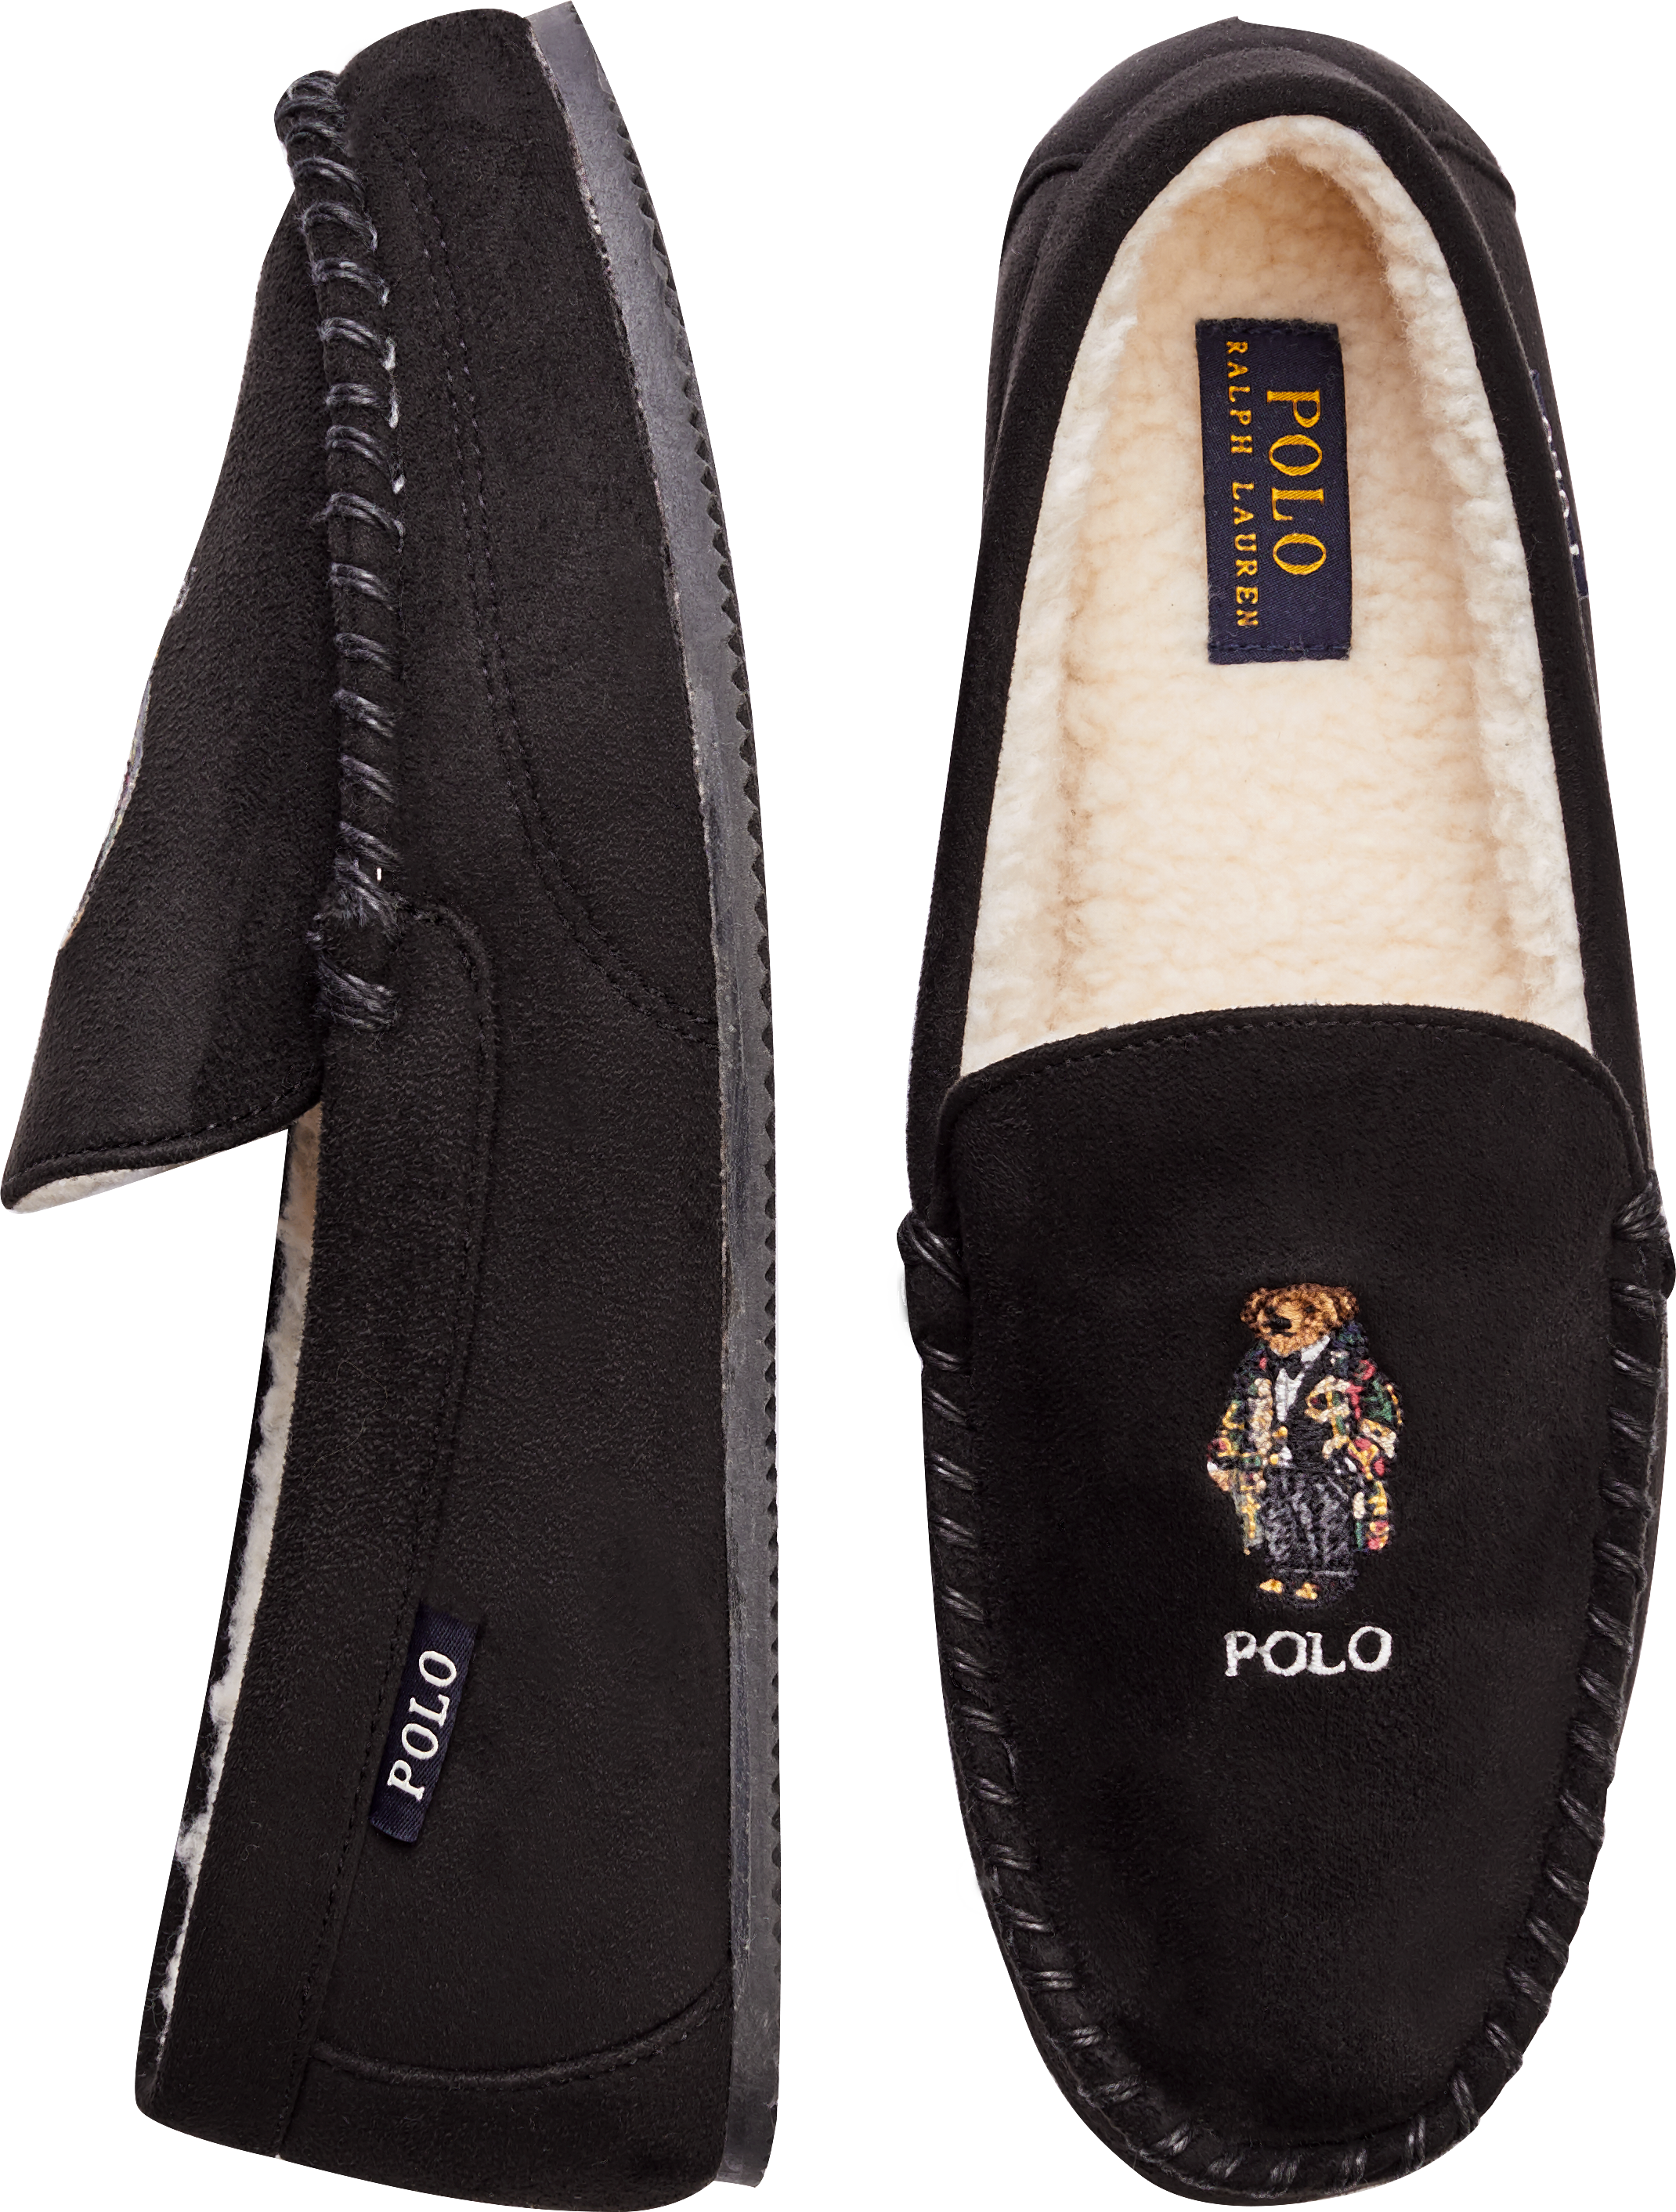 polo bear slippers